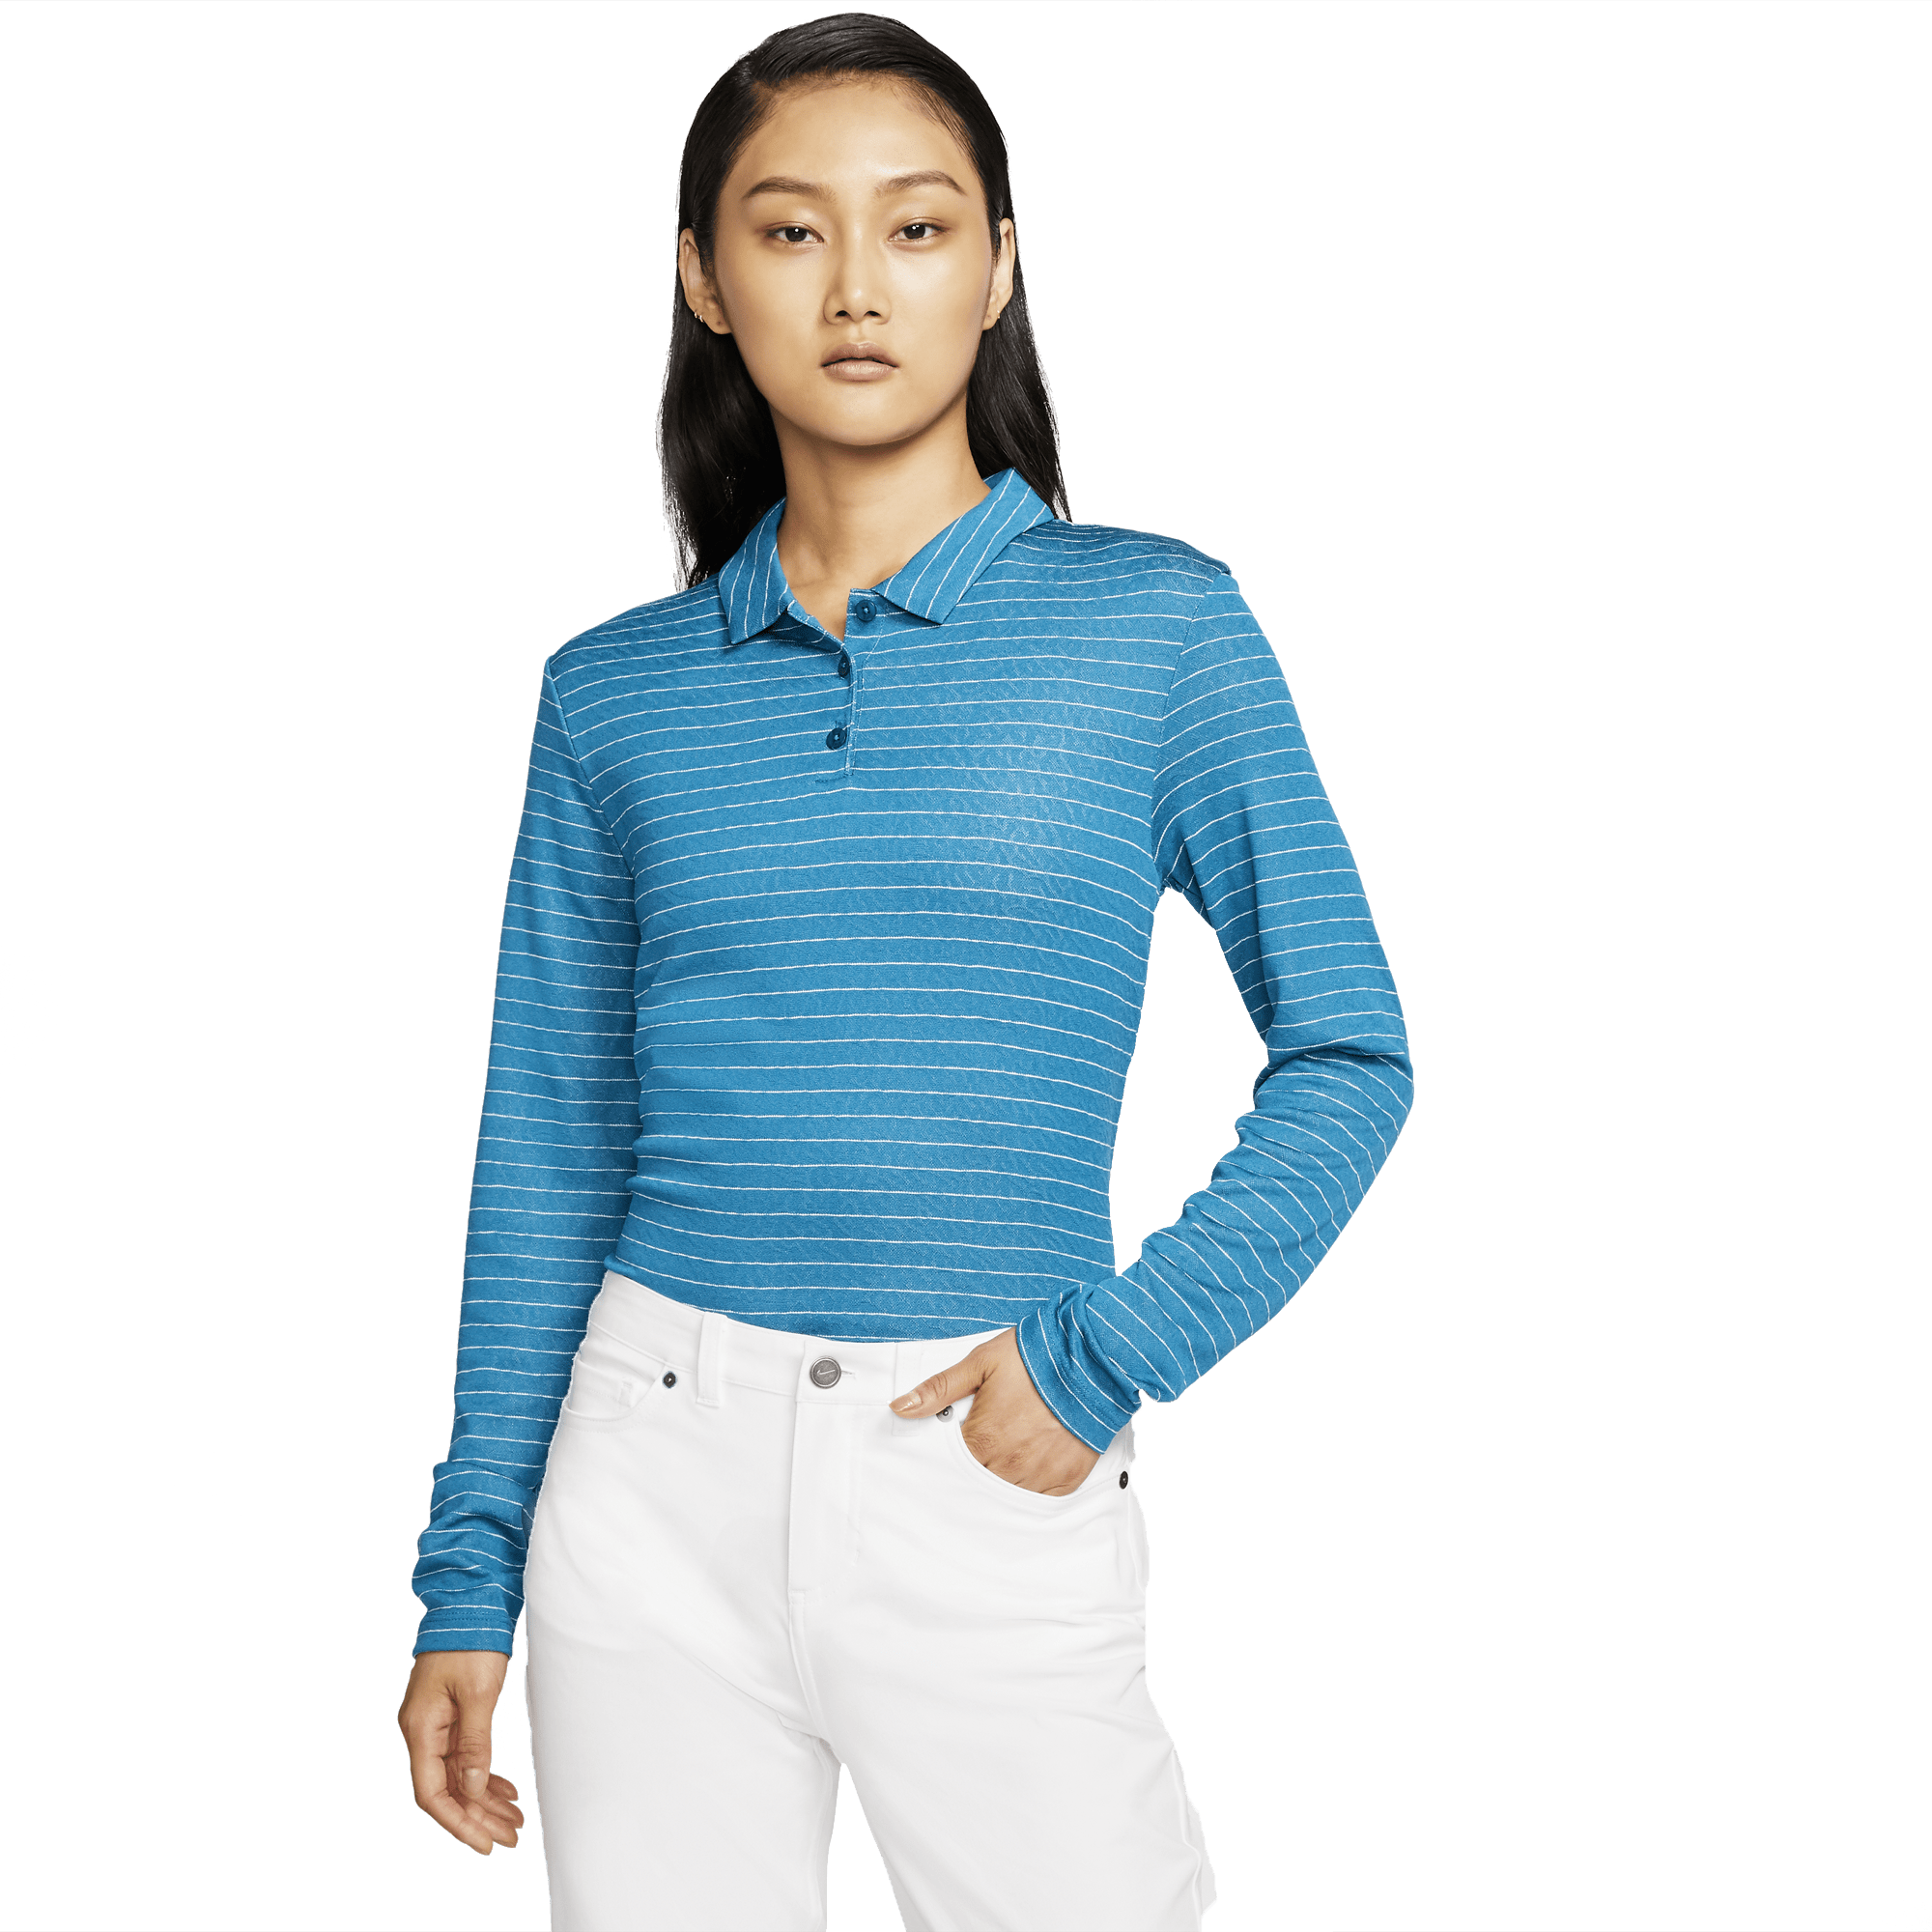 women's long sleeve striped polo shirts